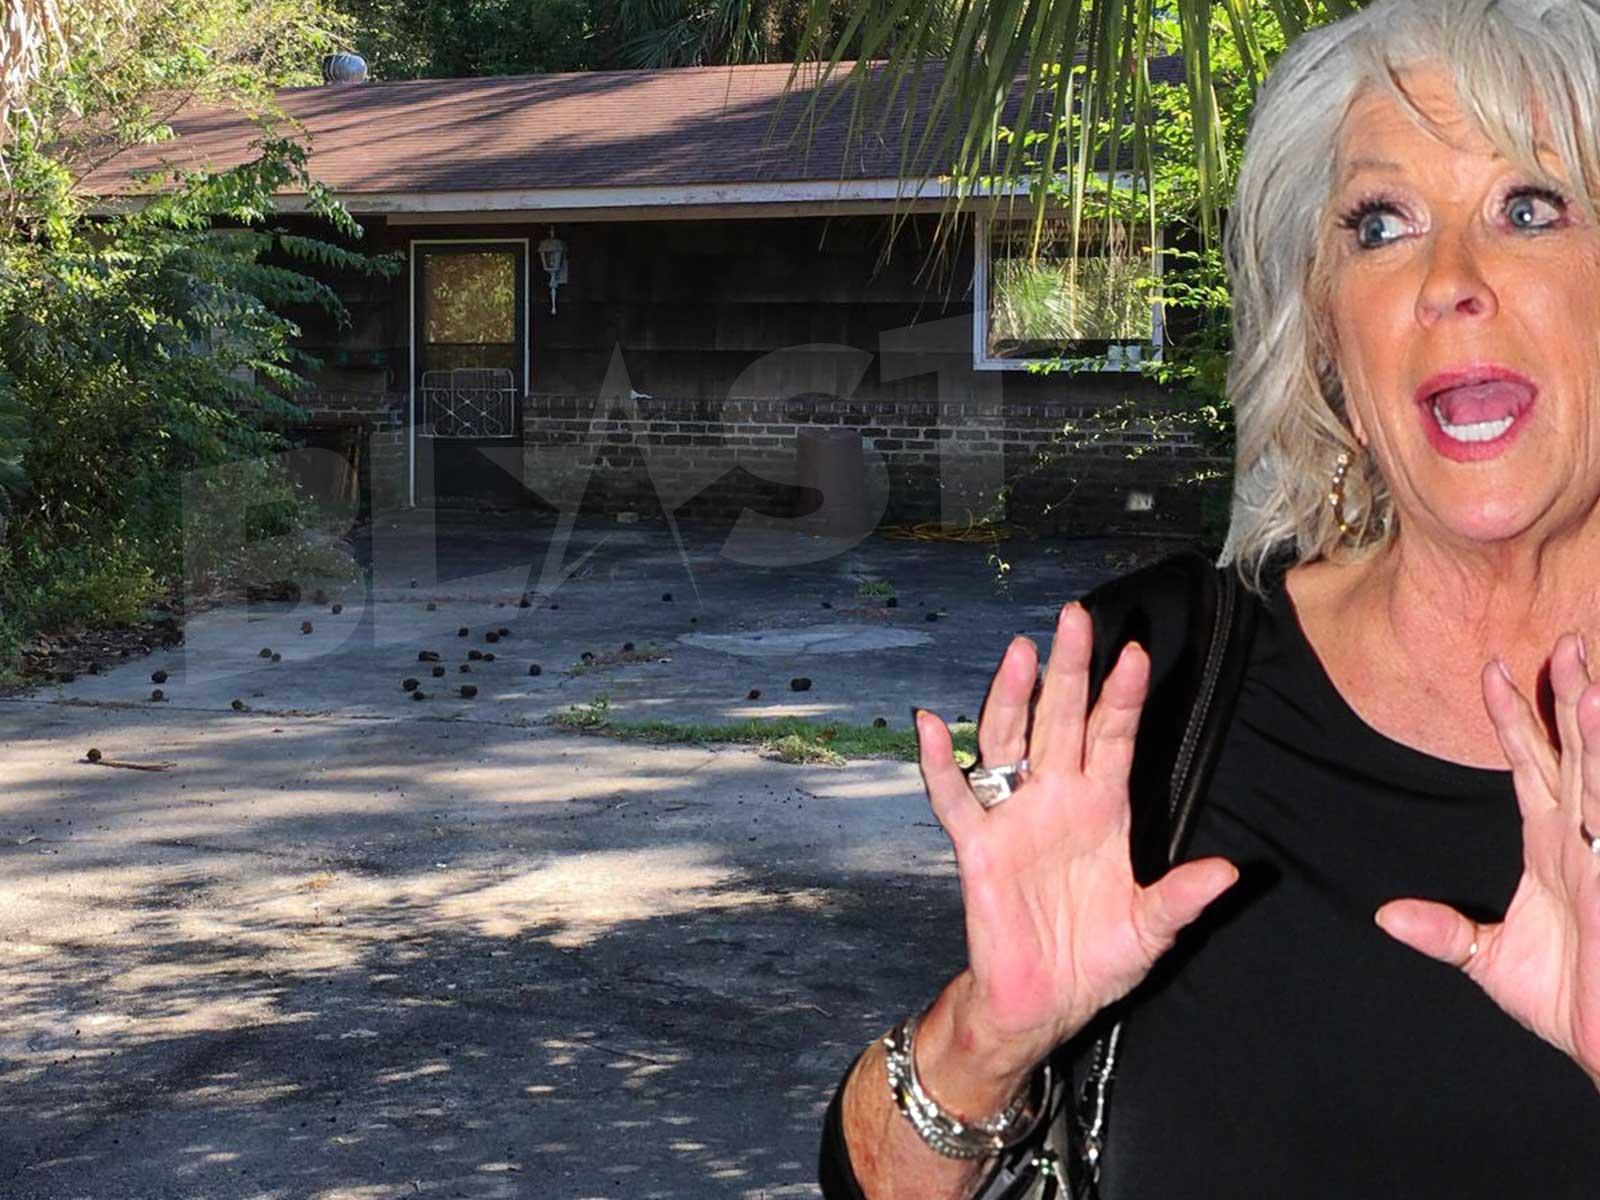 Paula Deen Scores Neighbor’s Home With ‘Playboy’ Agreement